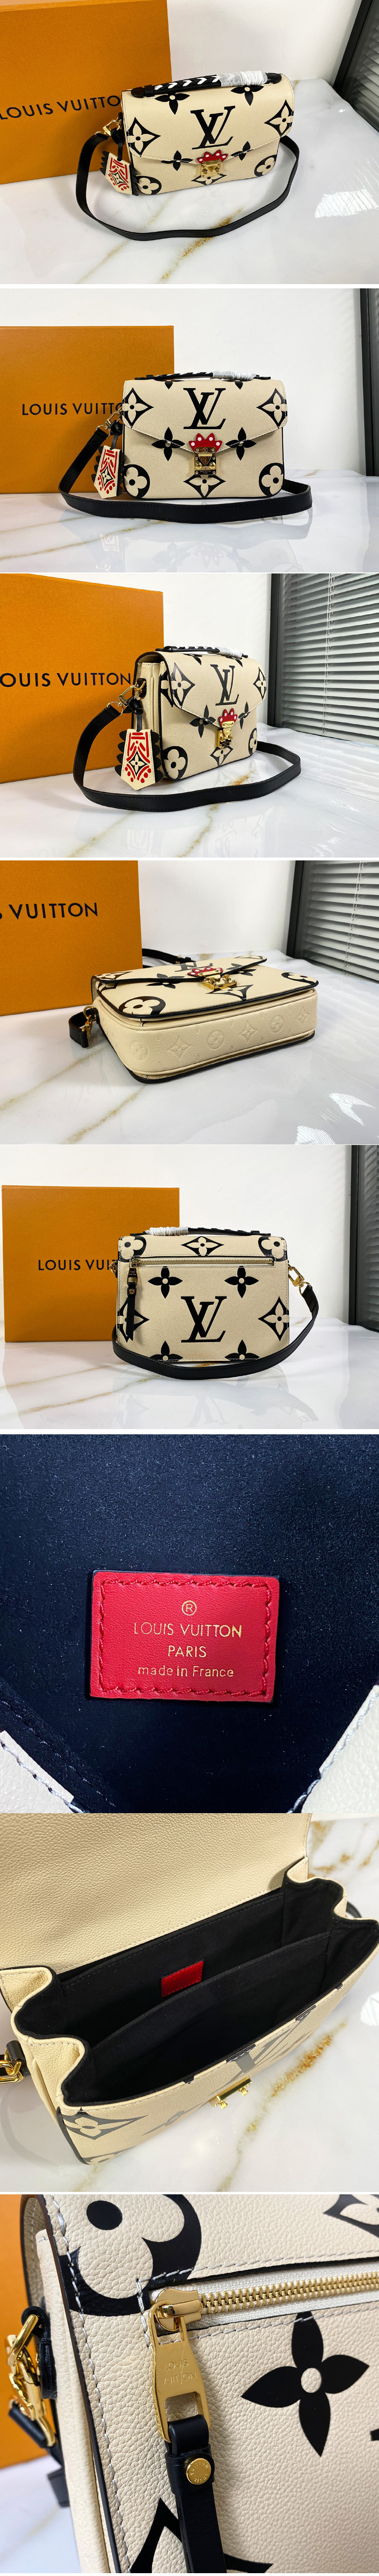 Replica Louis Vuitton M45384 LV Crafty Pochette Métis handbag in Cream Embossed grained cowhide leather